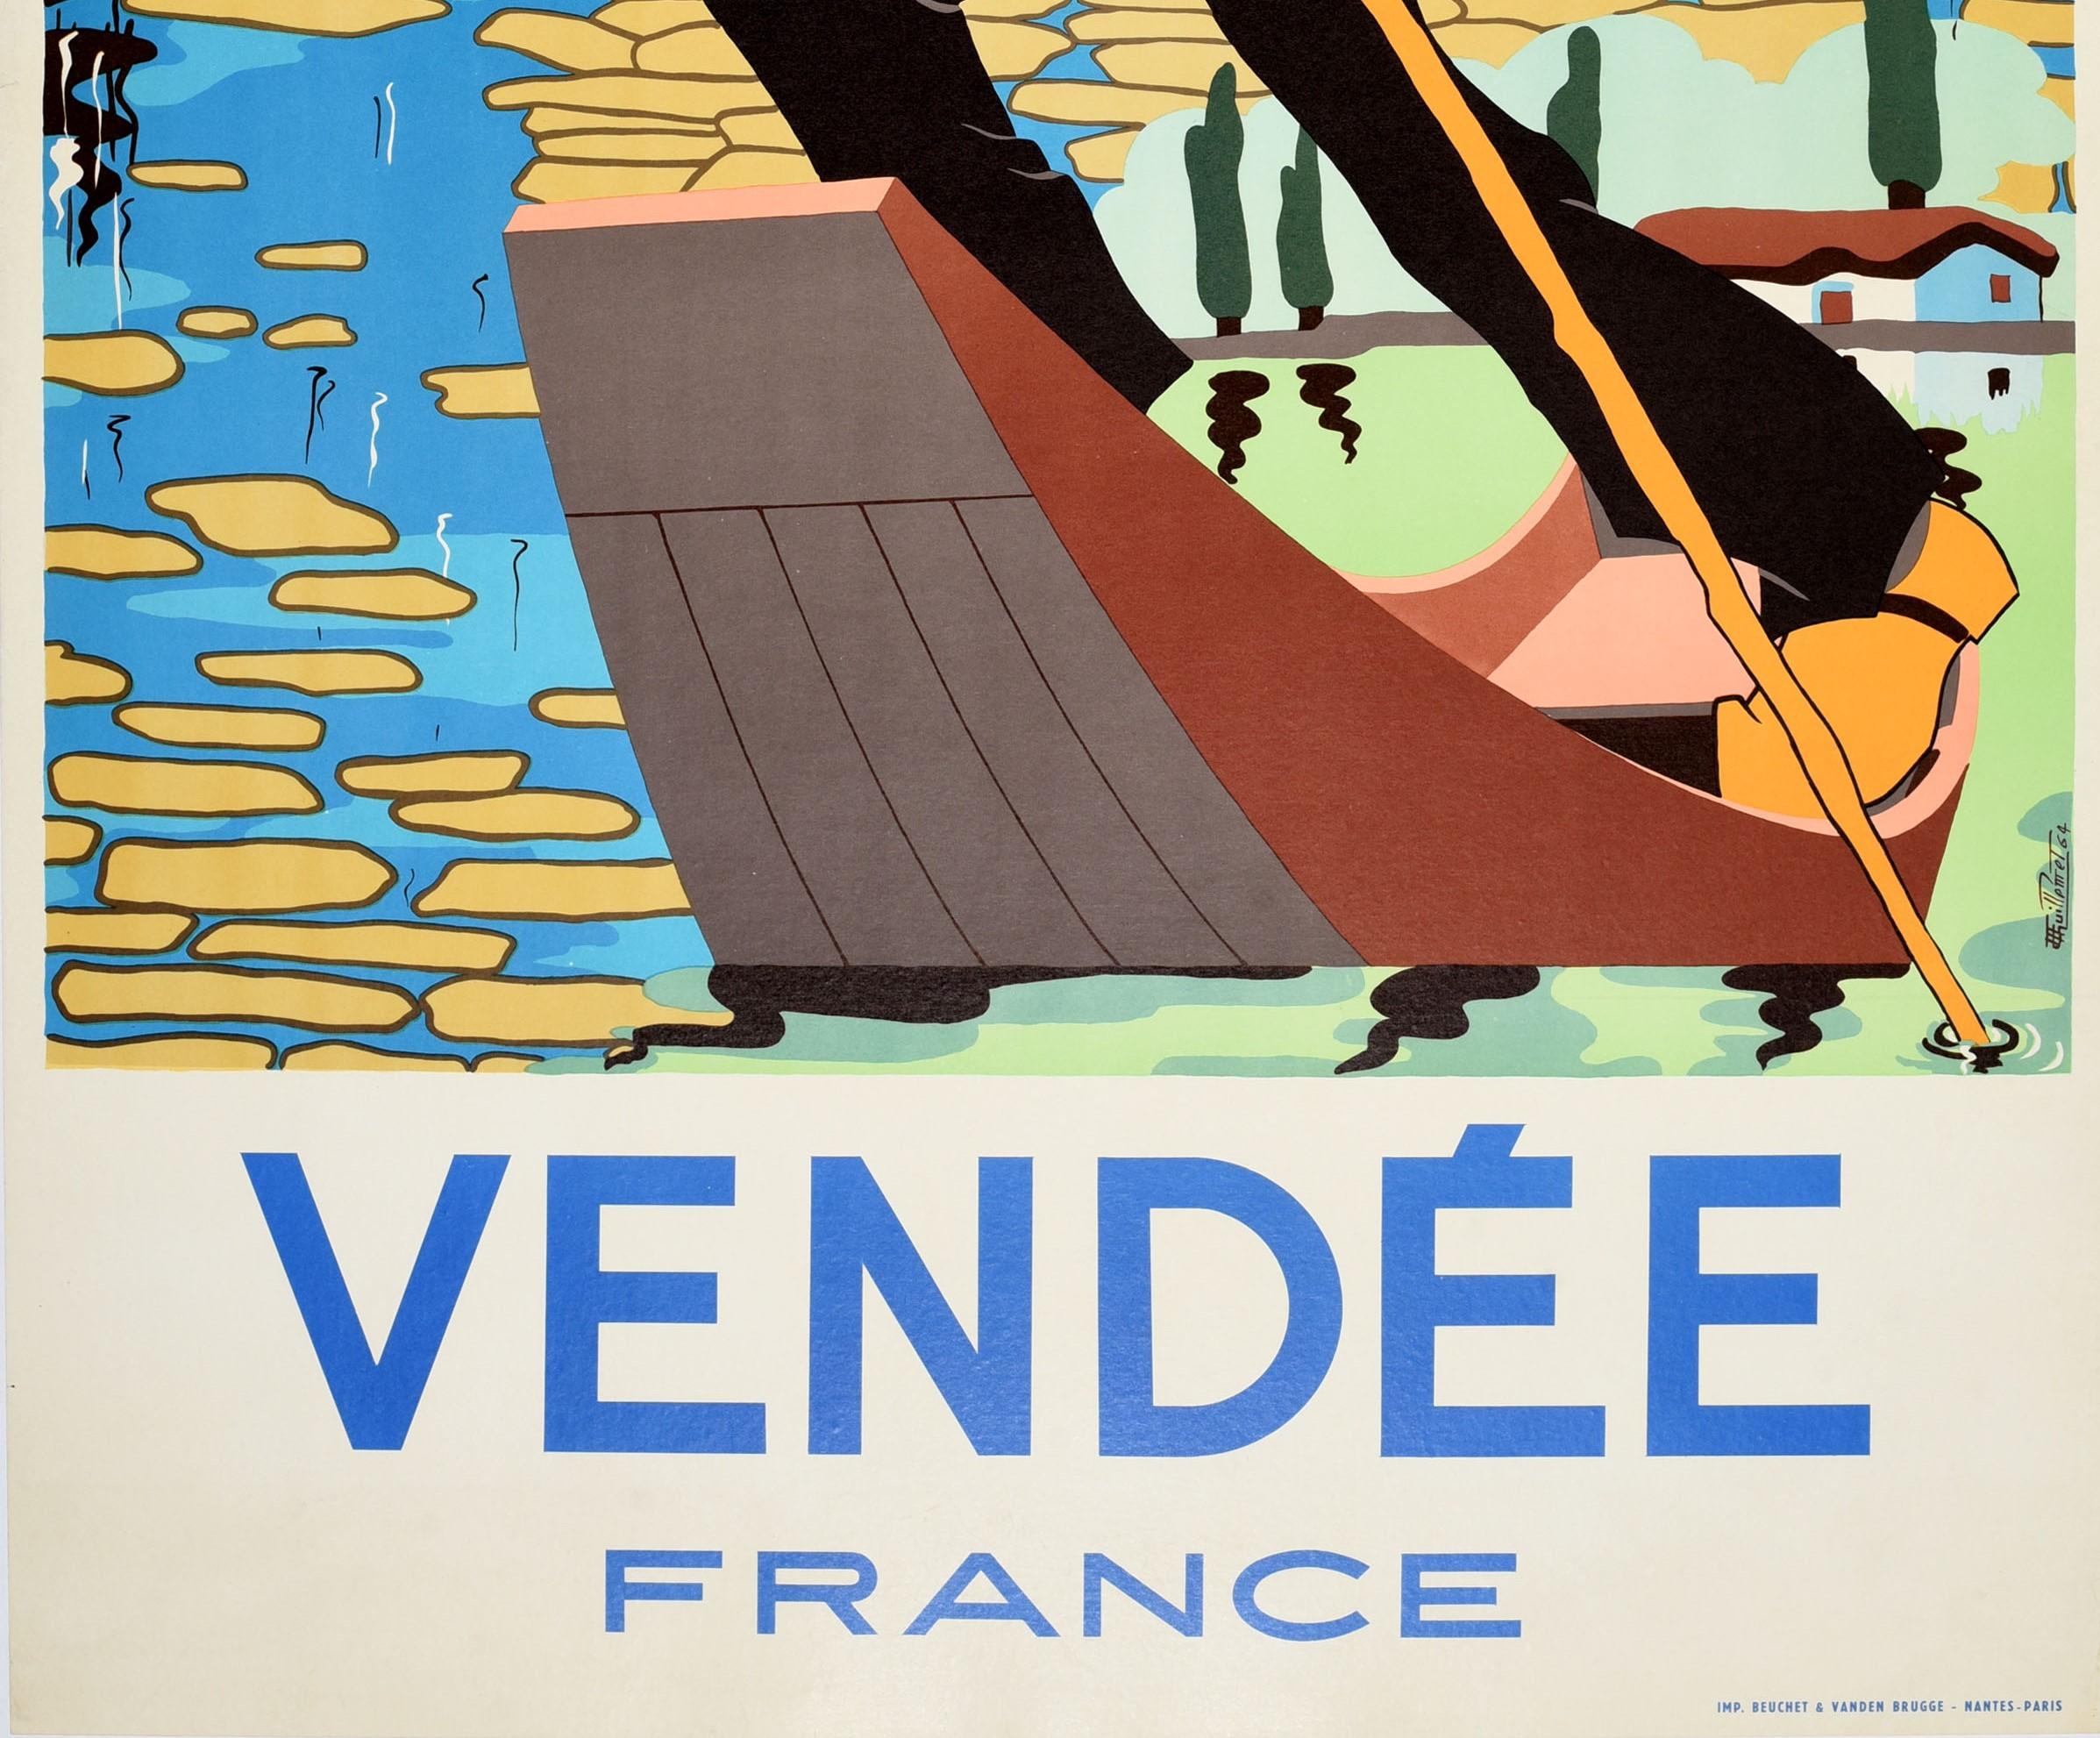 Original-Vintage-Reiseplakat Vendee France, Gondola-Flugzeug, Segeln, Atlantikkste (Blau), Print, von Guillemet